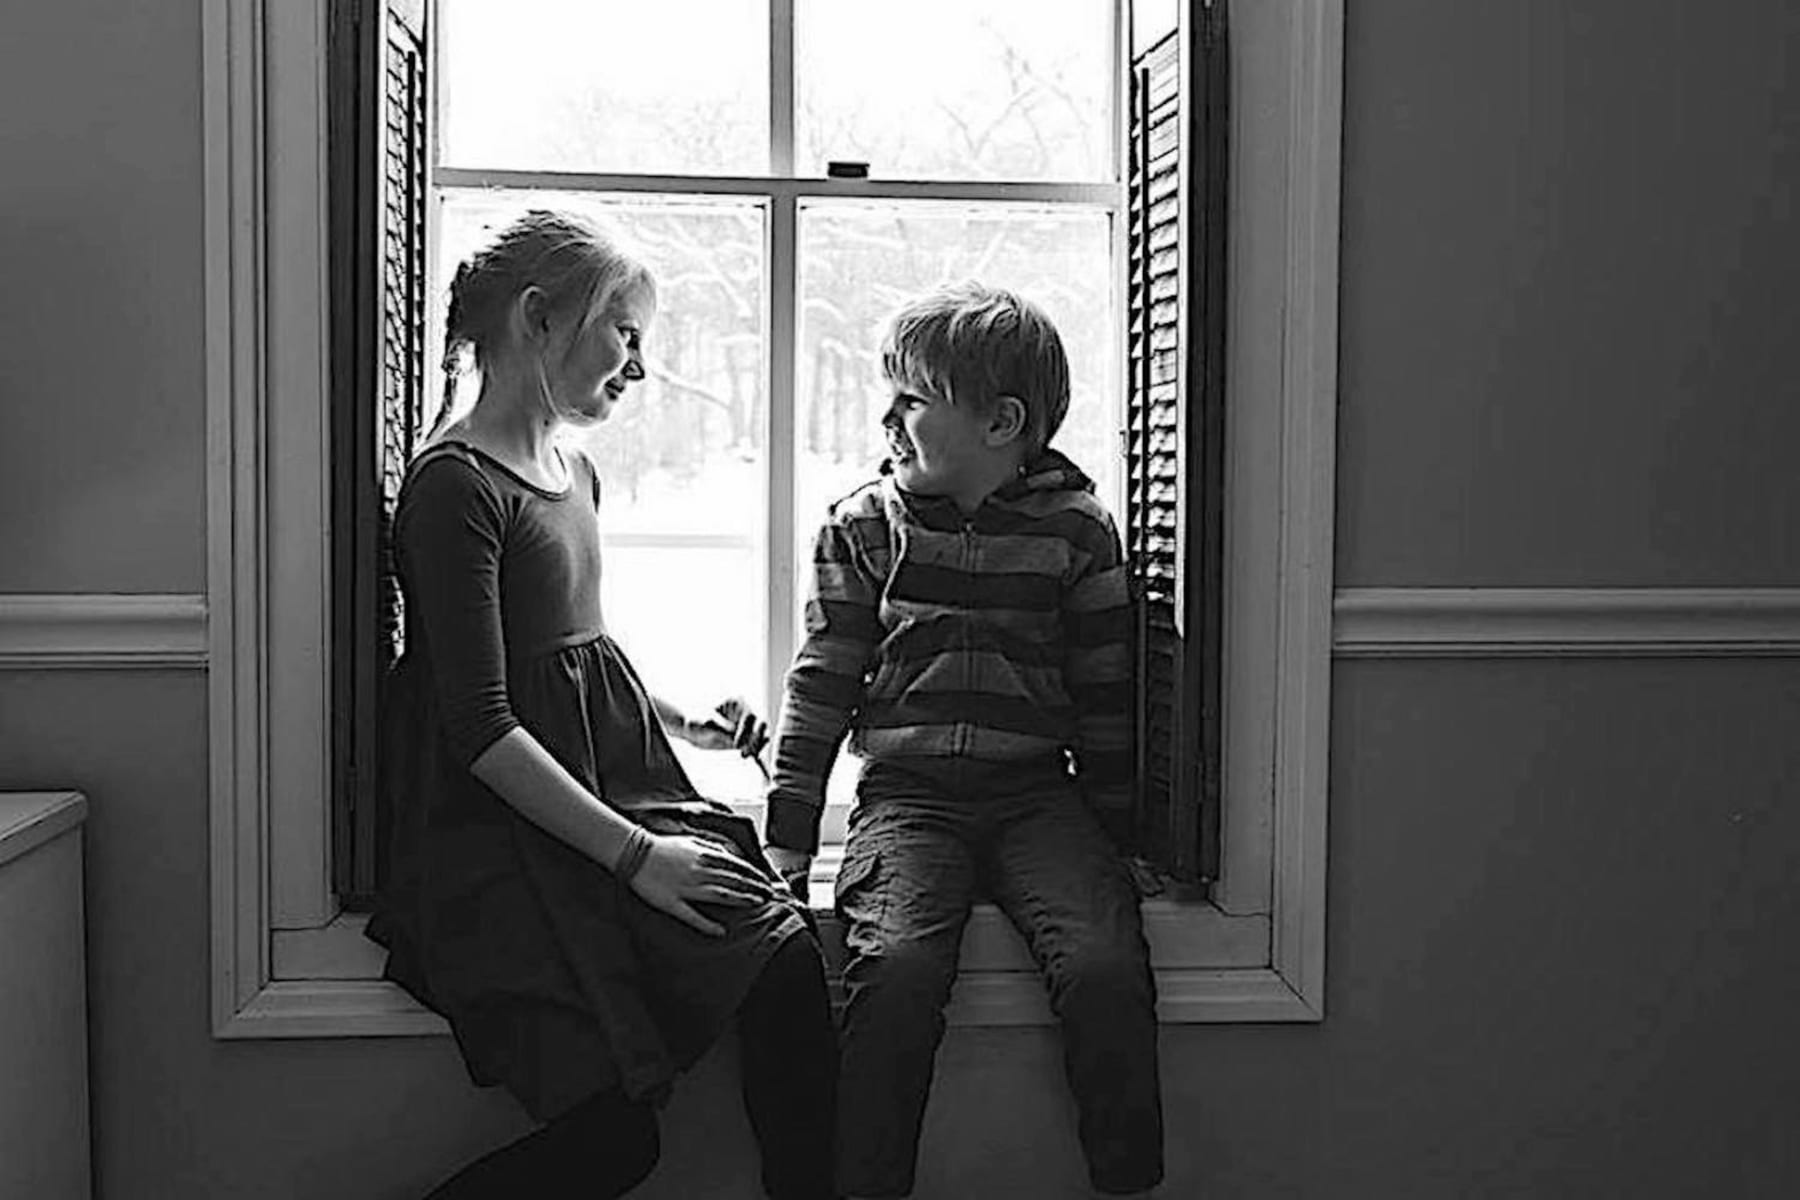 Boy and girl sitting in a windowsill.